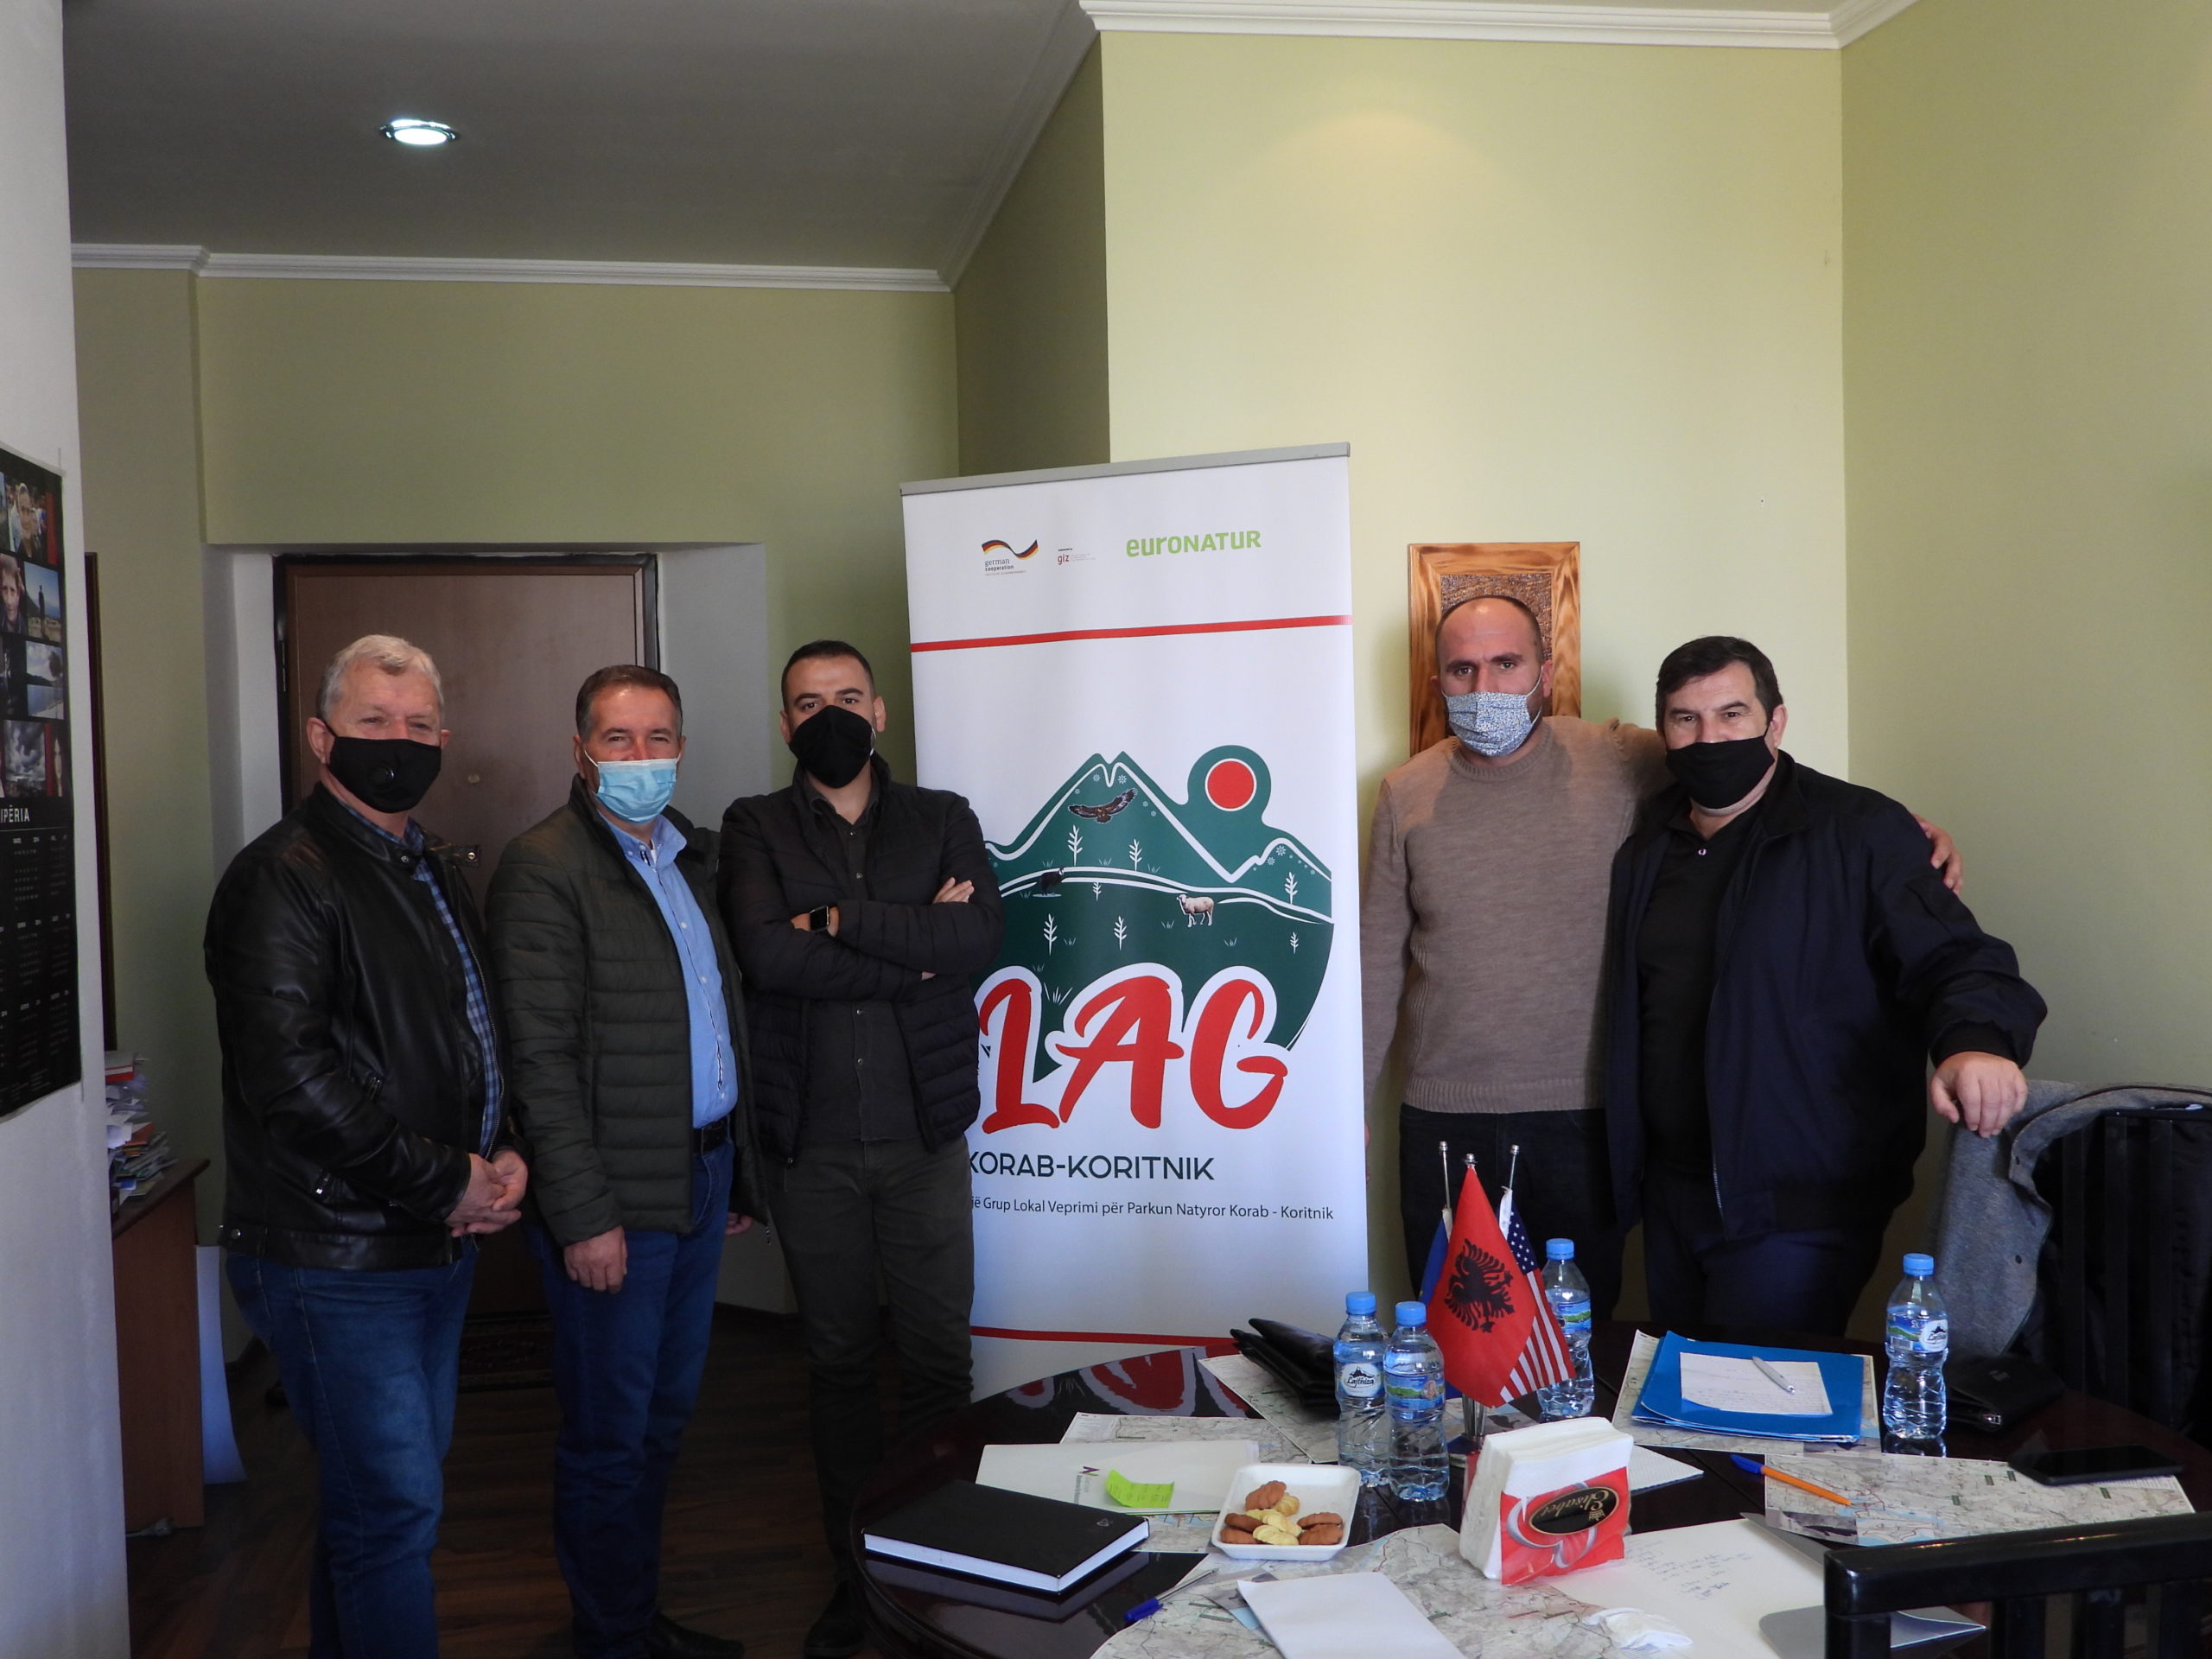 A coordinating meeting was organized among LAG Korab-Koritnik initiators